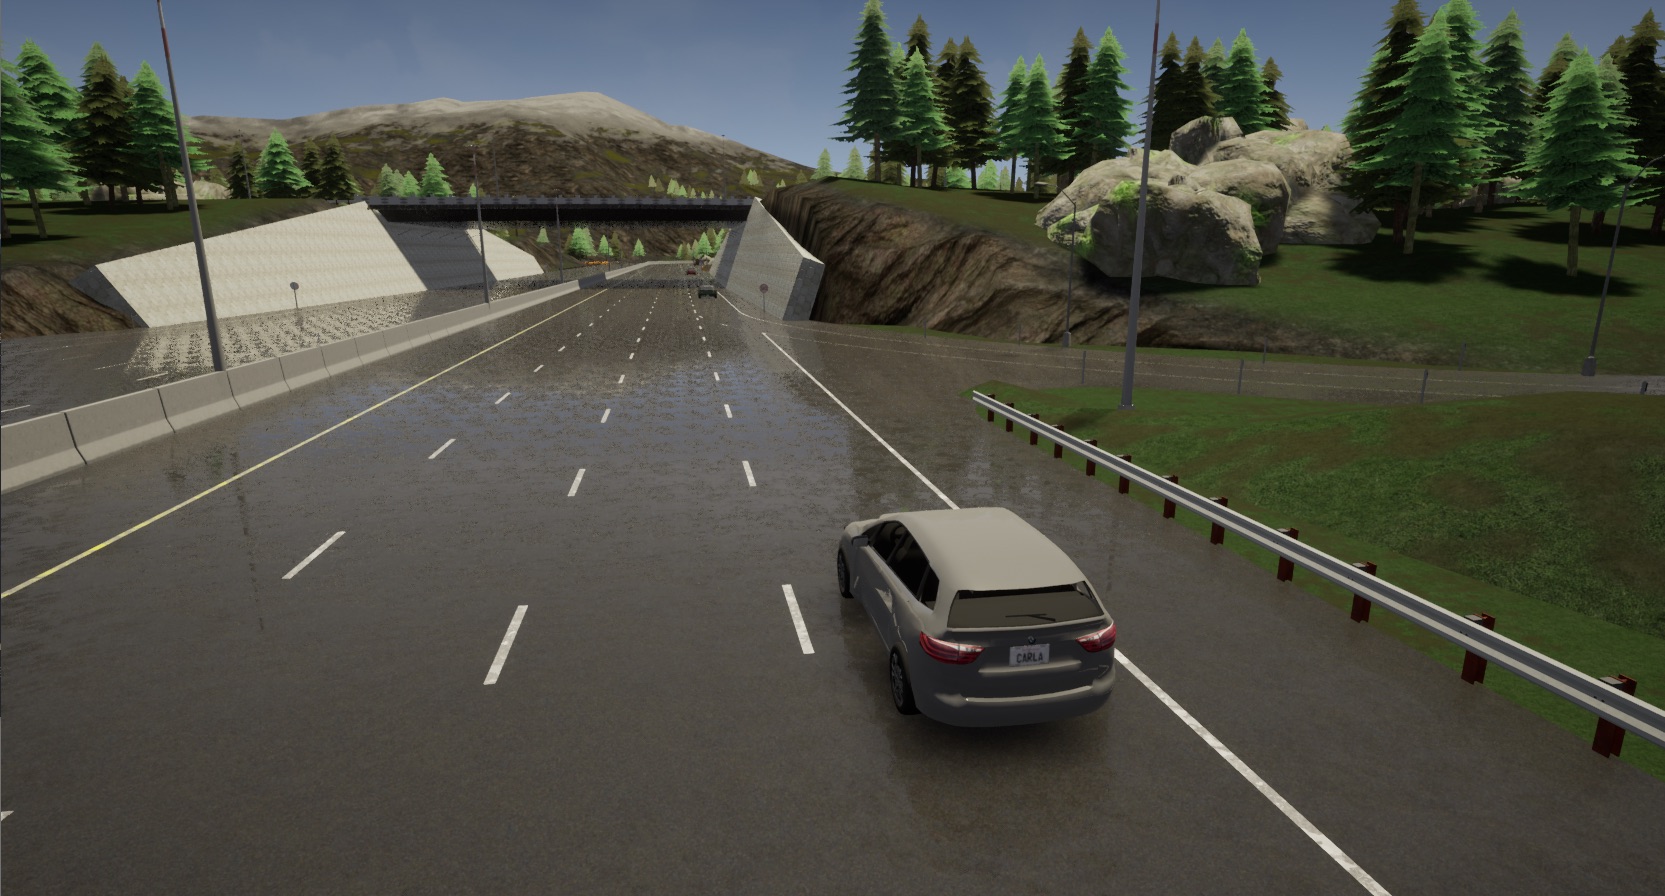 Modified lane changing scenario in same town